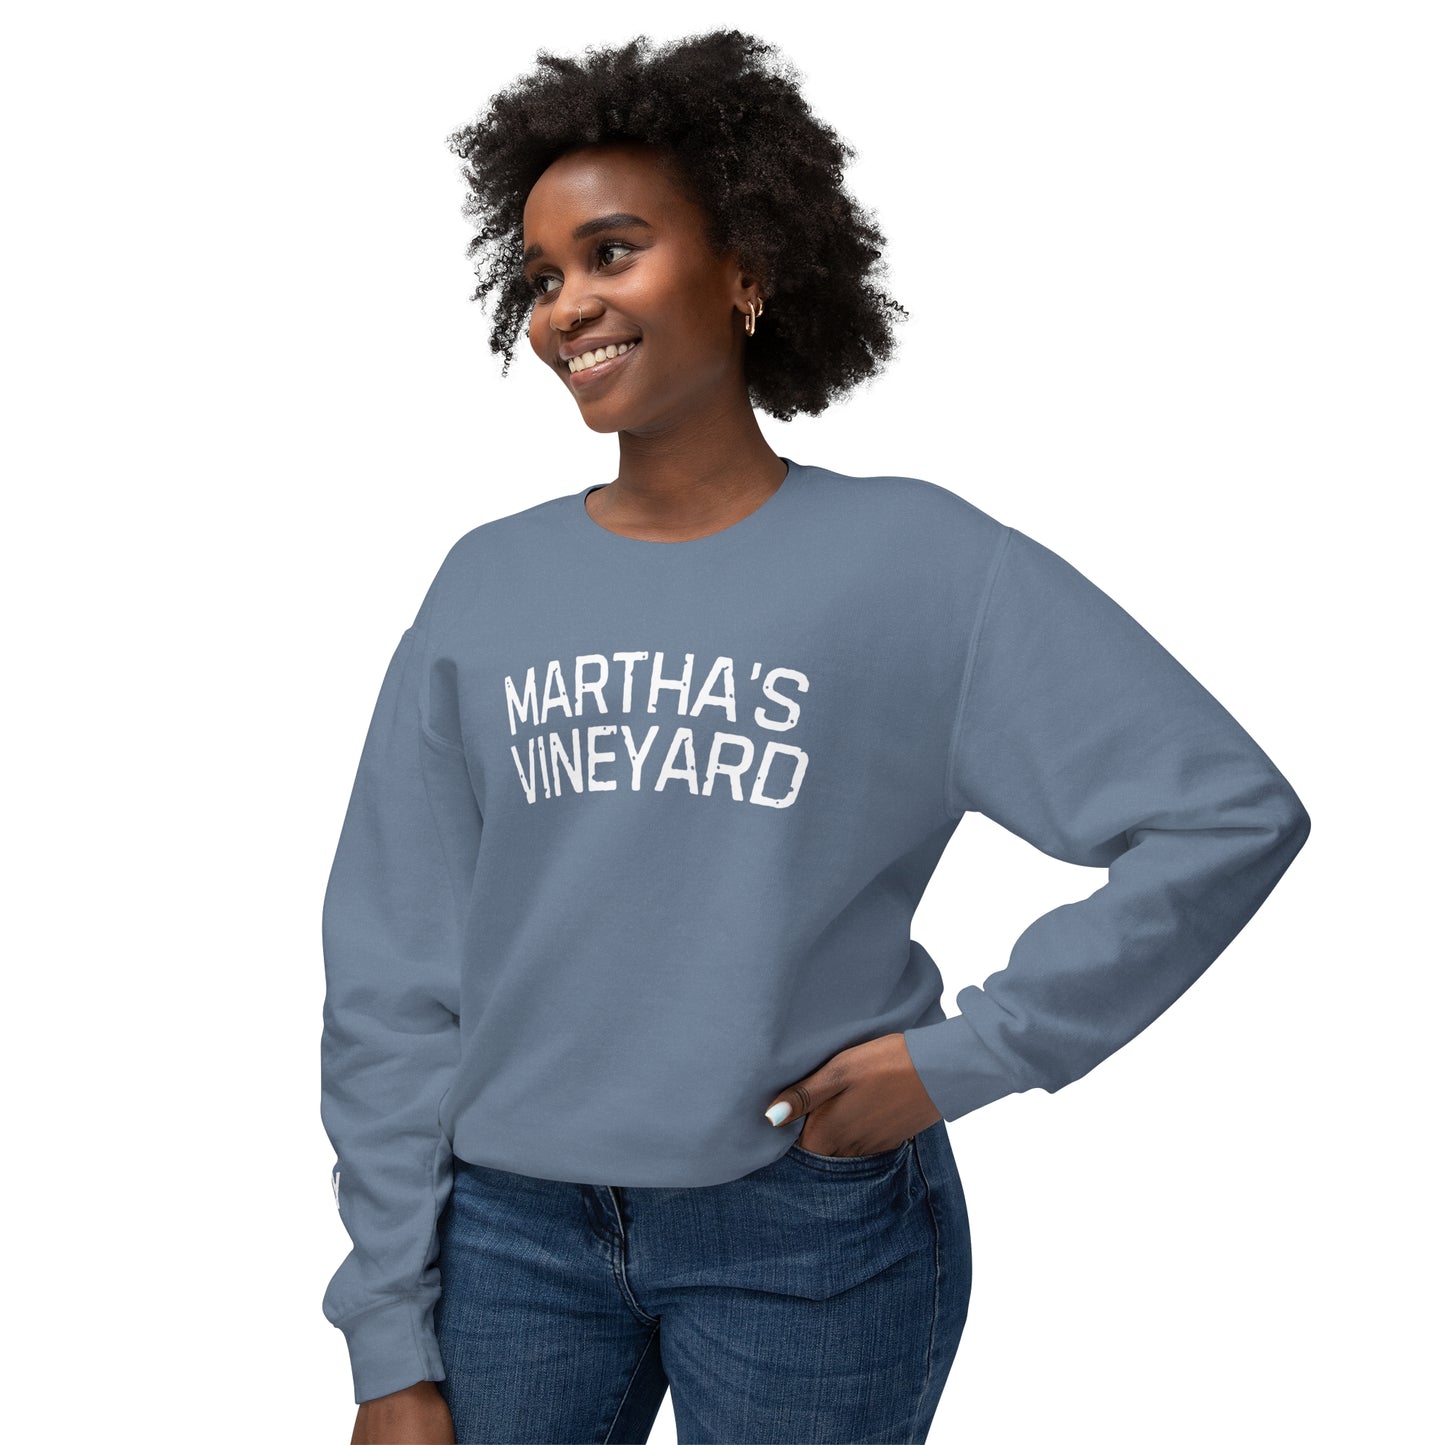 Martha's Vineyard Inspired Crewneck Sweatshirt - Soft Ring-Spun Cotton with MVY & The Vineyard Design